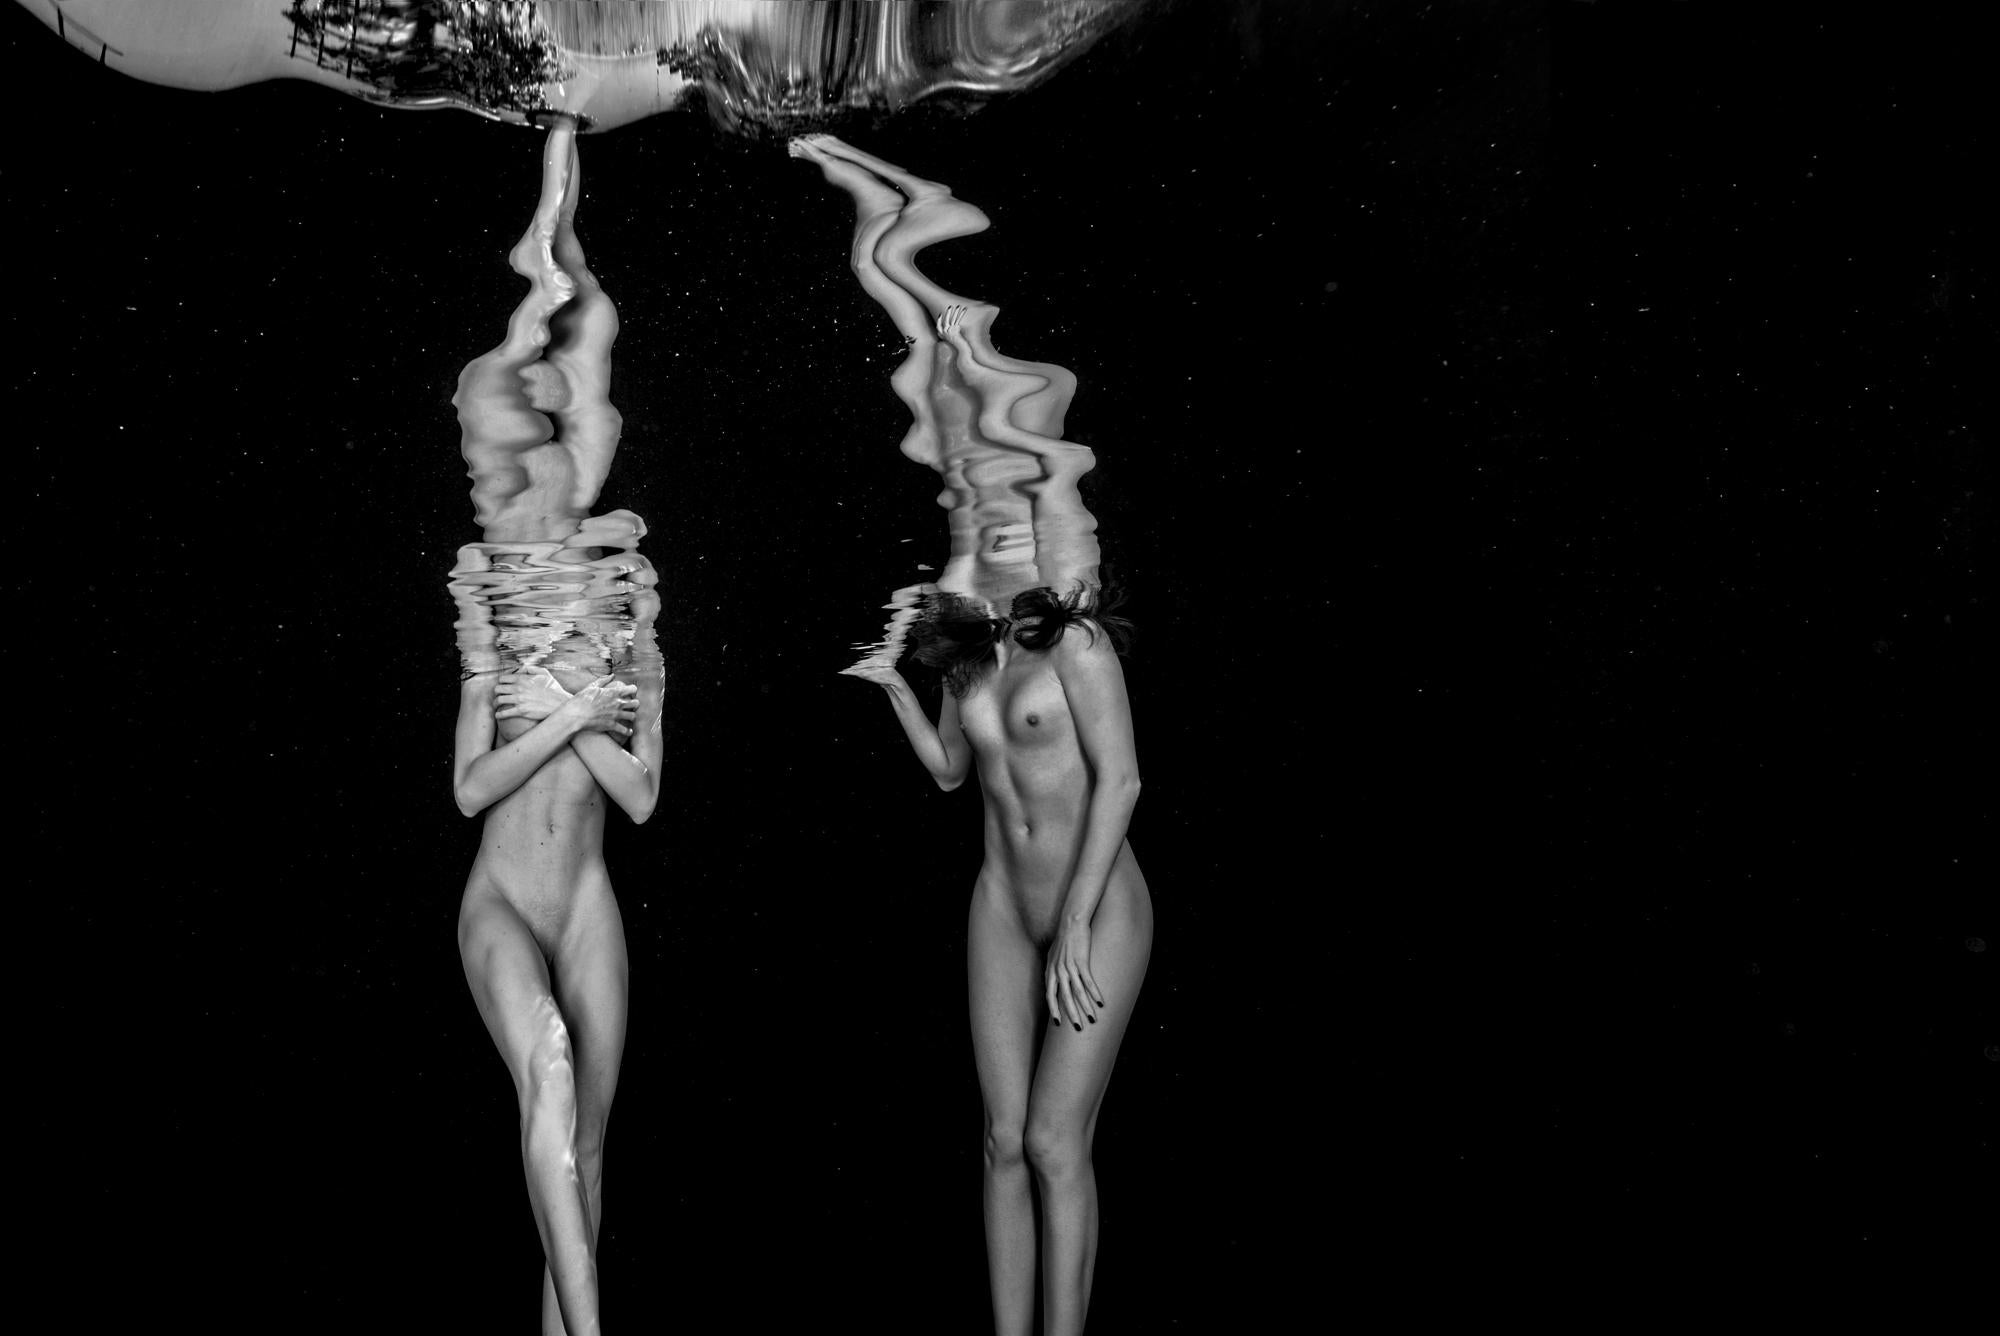 Small Talk - underwater black & white nude photograph - archival pigment 16x24"